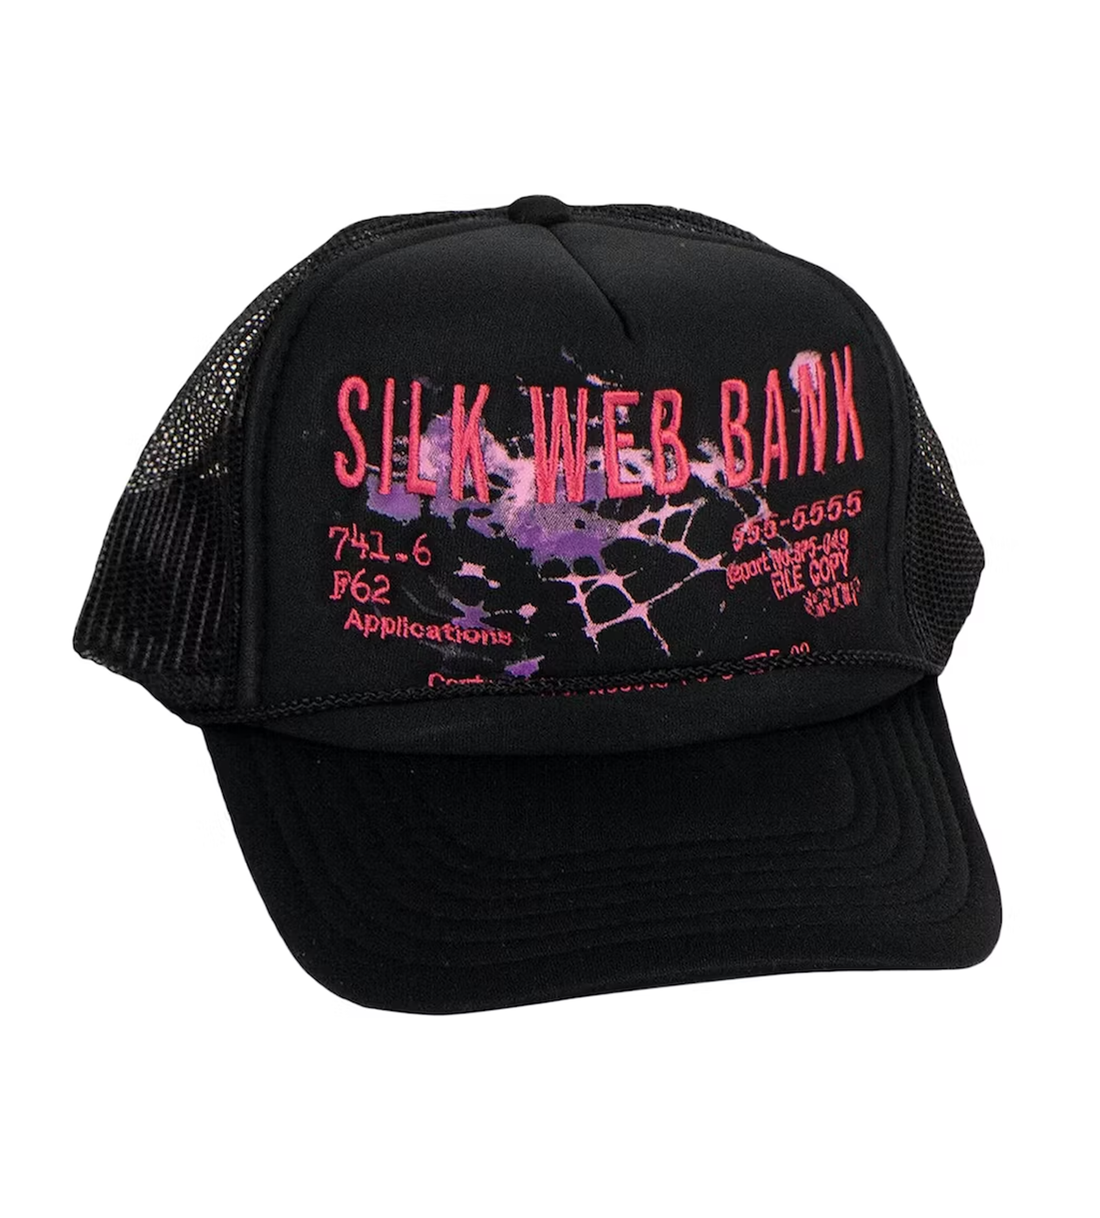 Sp5der Worldwide Silk Web Bank Trucker Hat Black/Pink Product Image